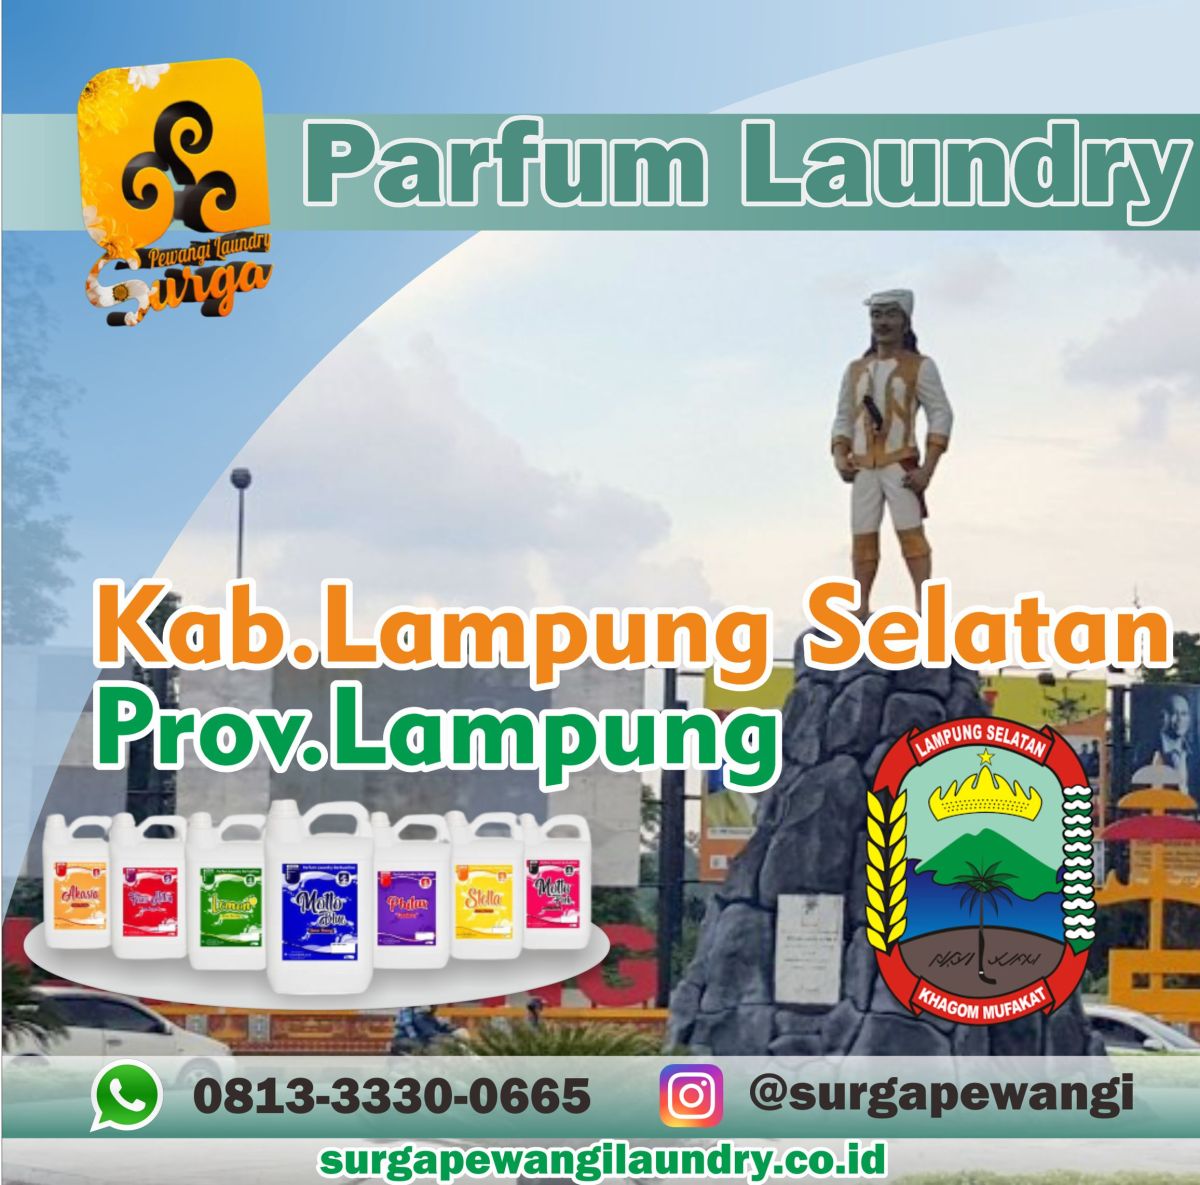 Parfum Laundry Kabupaten Lampung Selatan, Prov Lampung